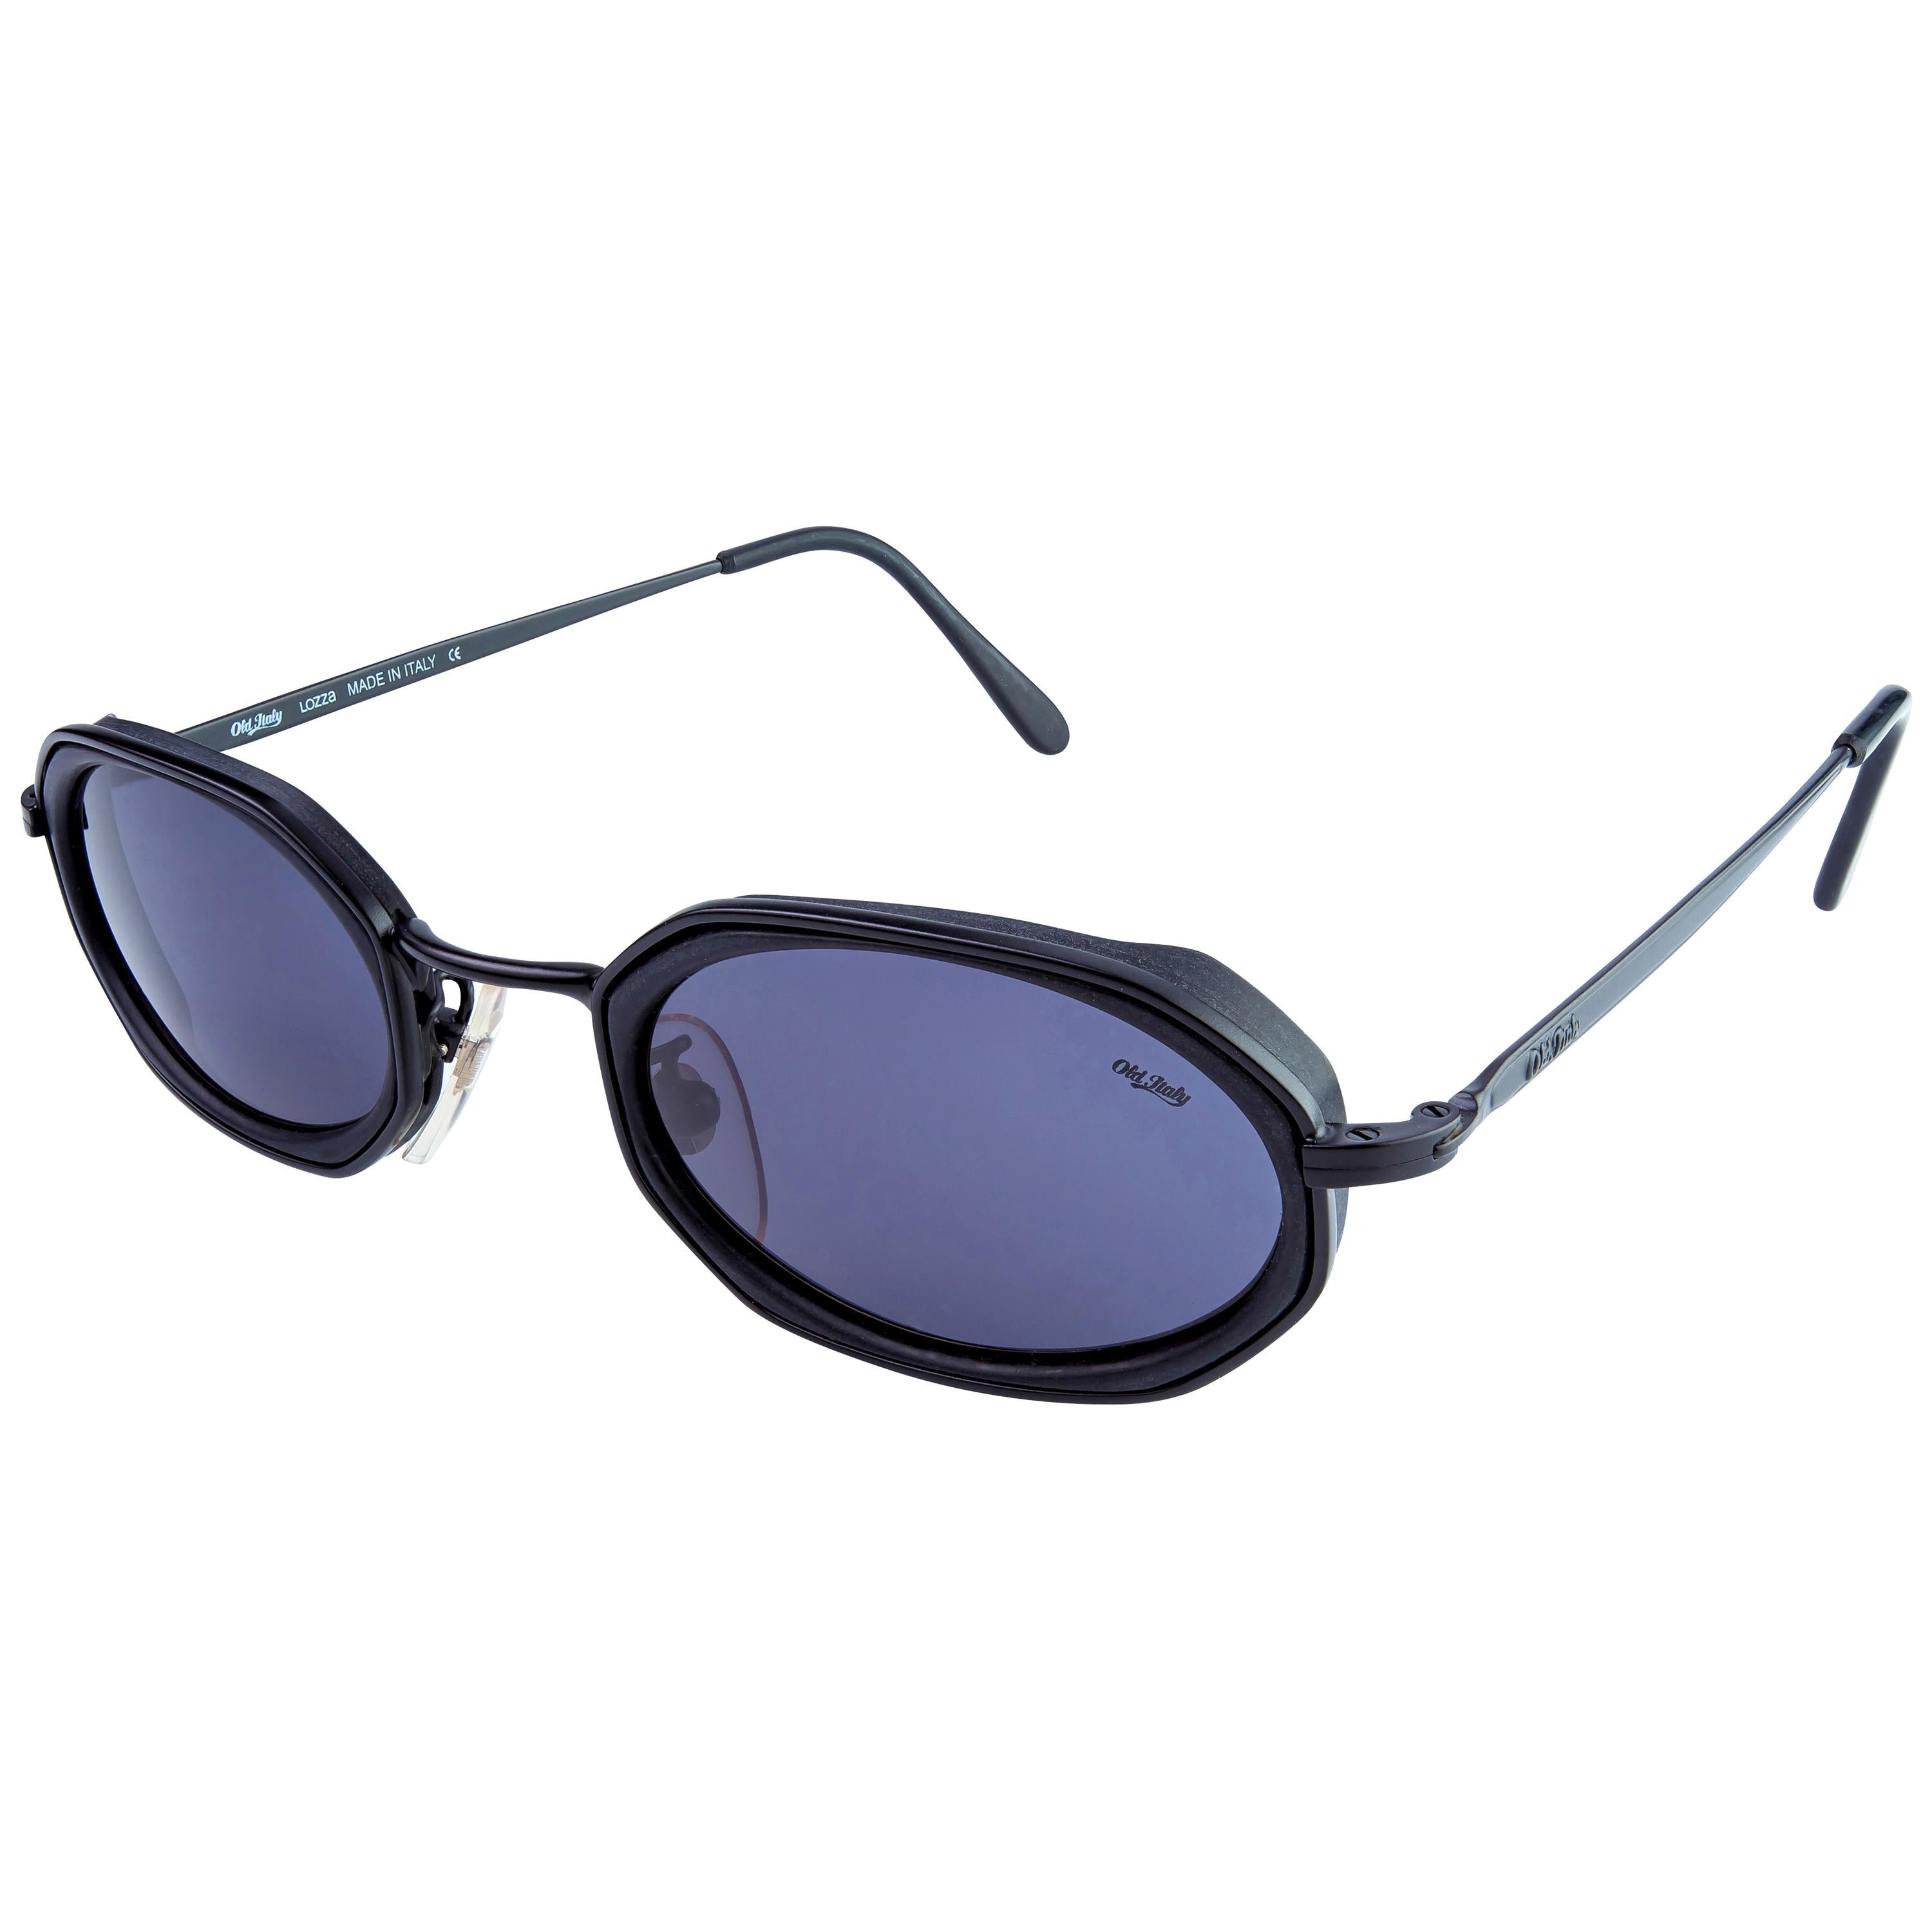  Lozza hexagonal vintage sunglasses, Italy 80s For Sale